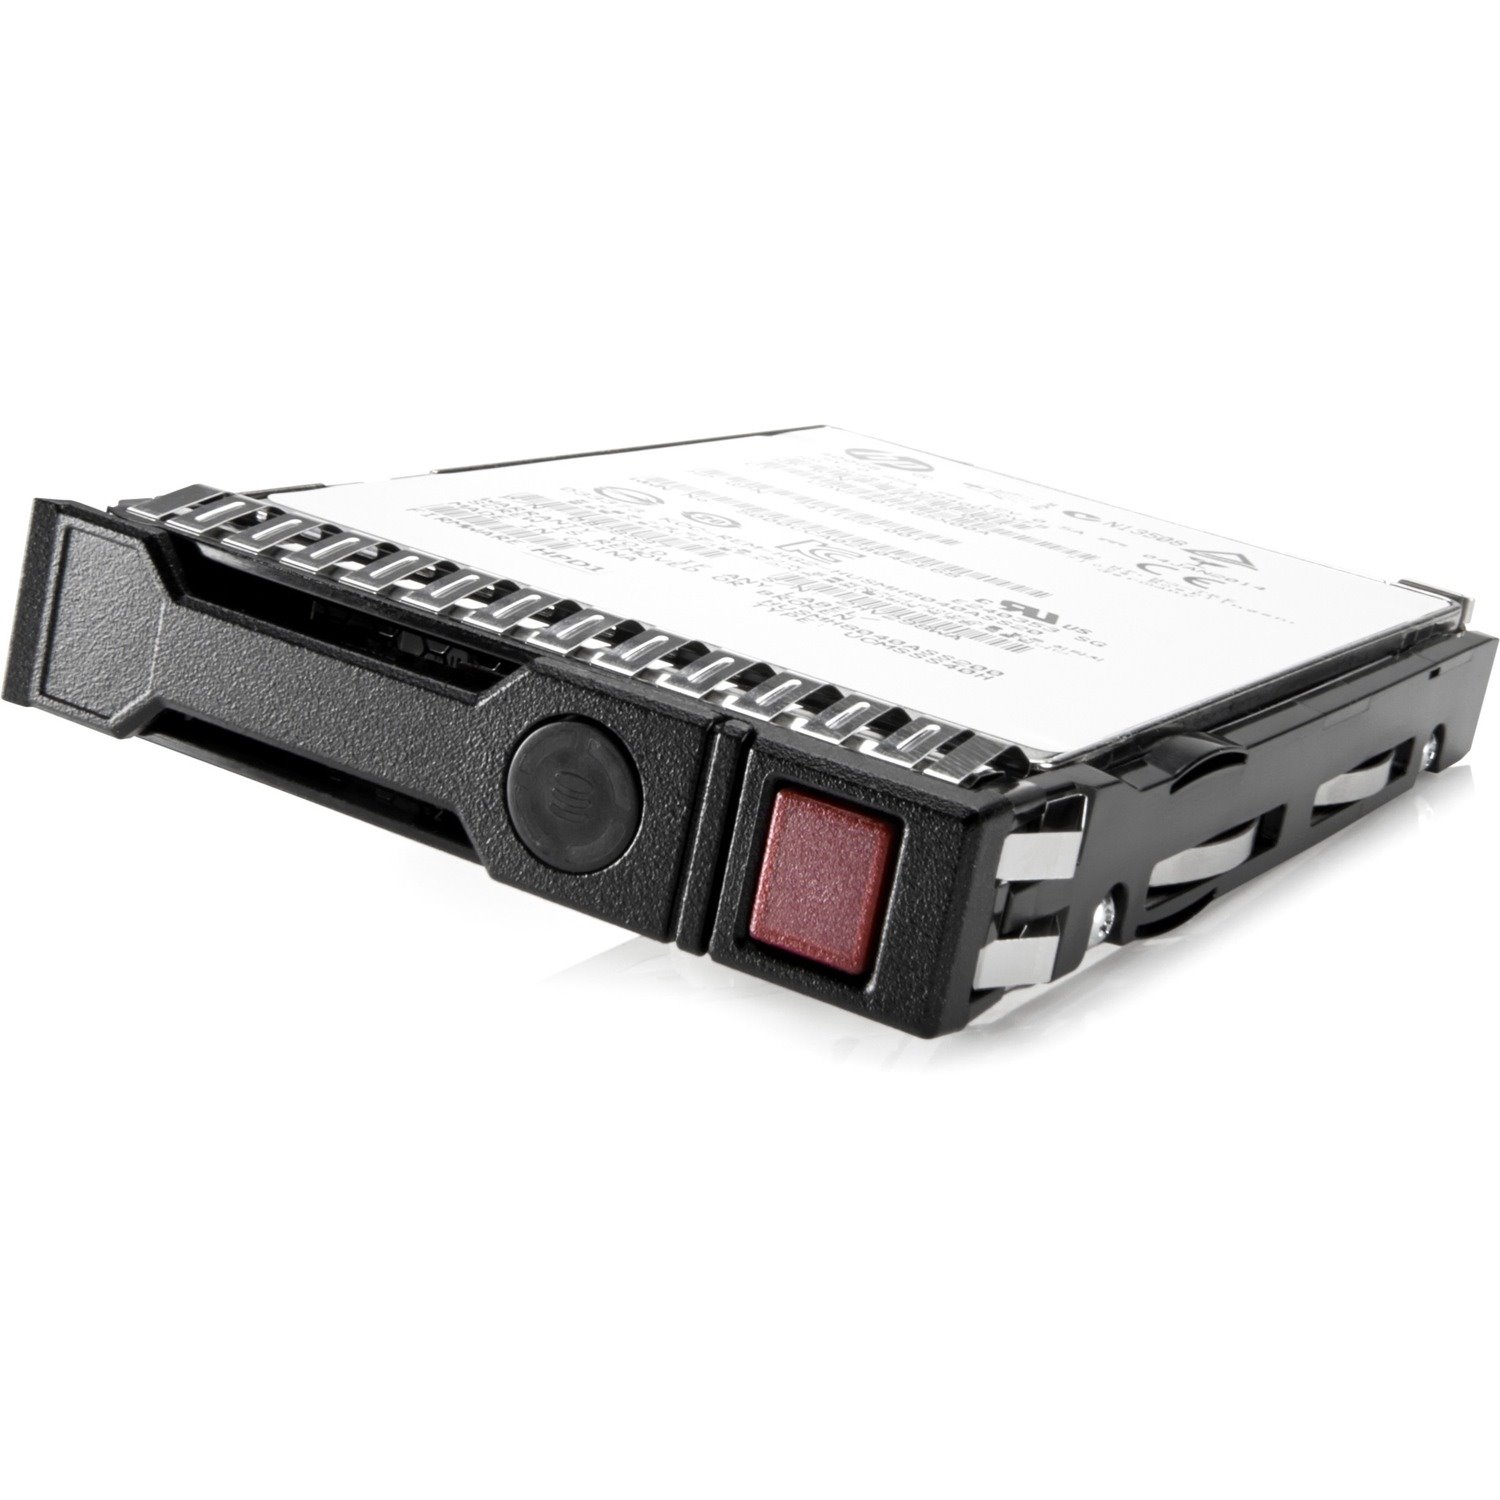 HPE 300 GB Hard Drive - 2.5" Internal - SAS (12Gb/s SAS)